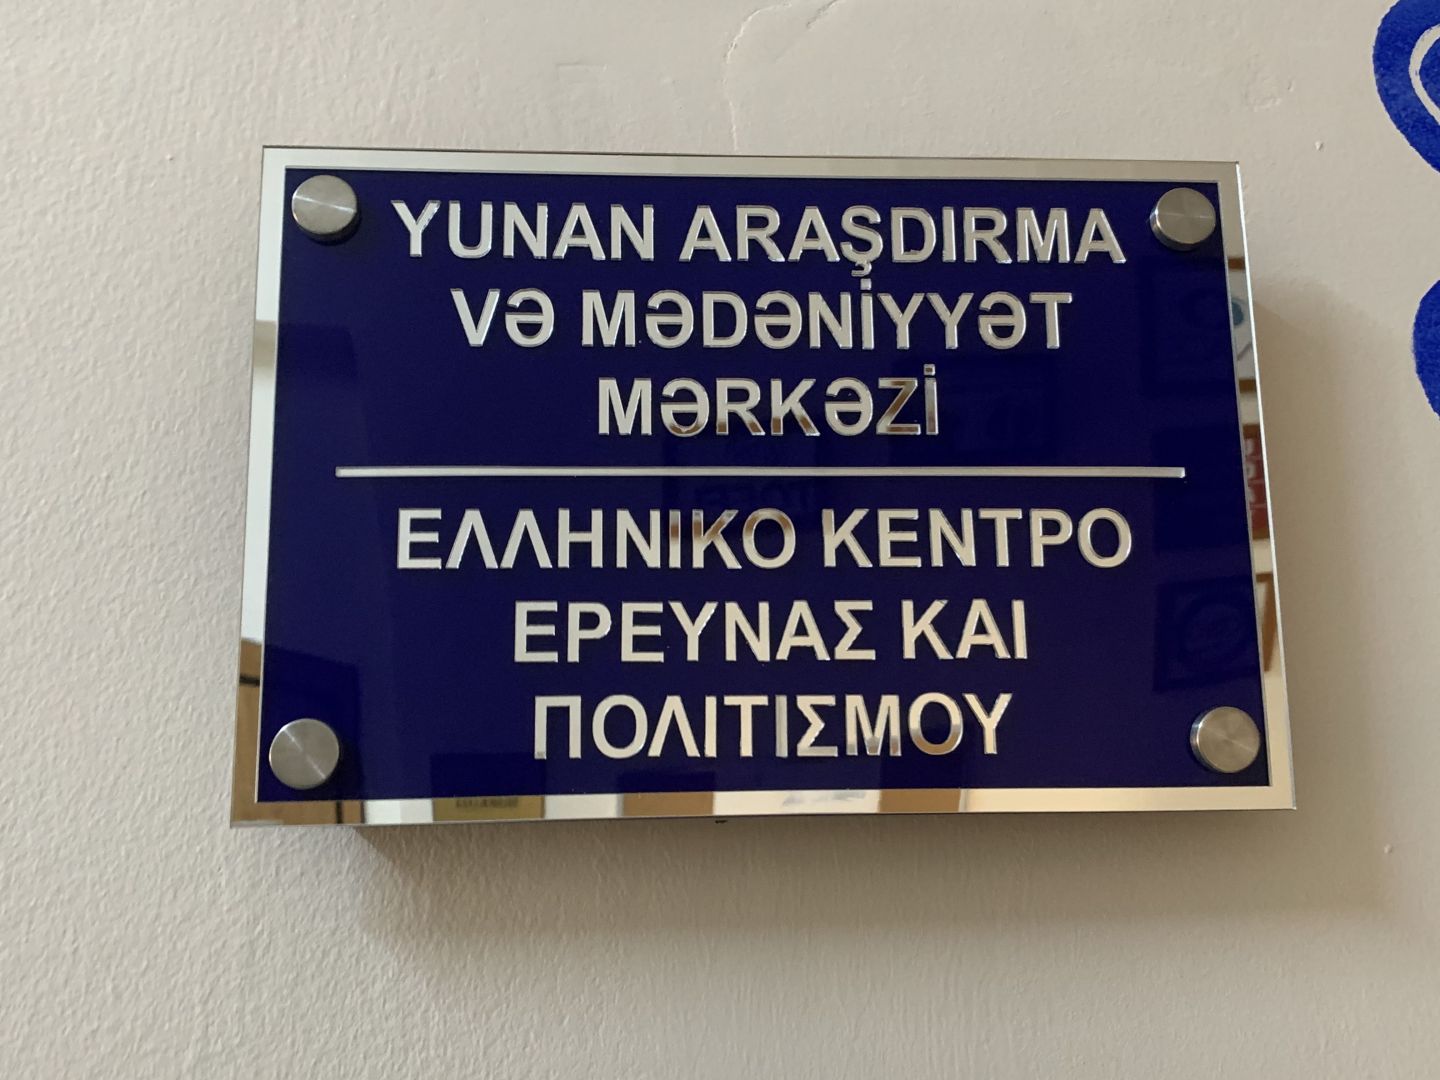 Greek research & culture center inaugurated in Azerbaijani capital [PHOTO]